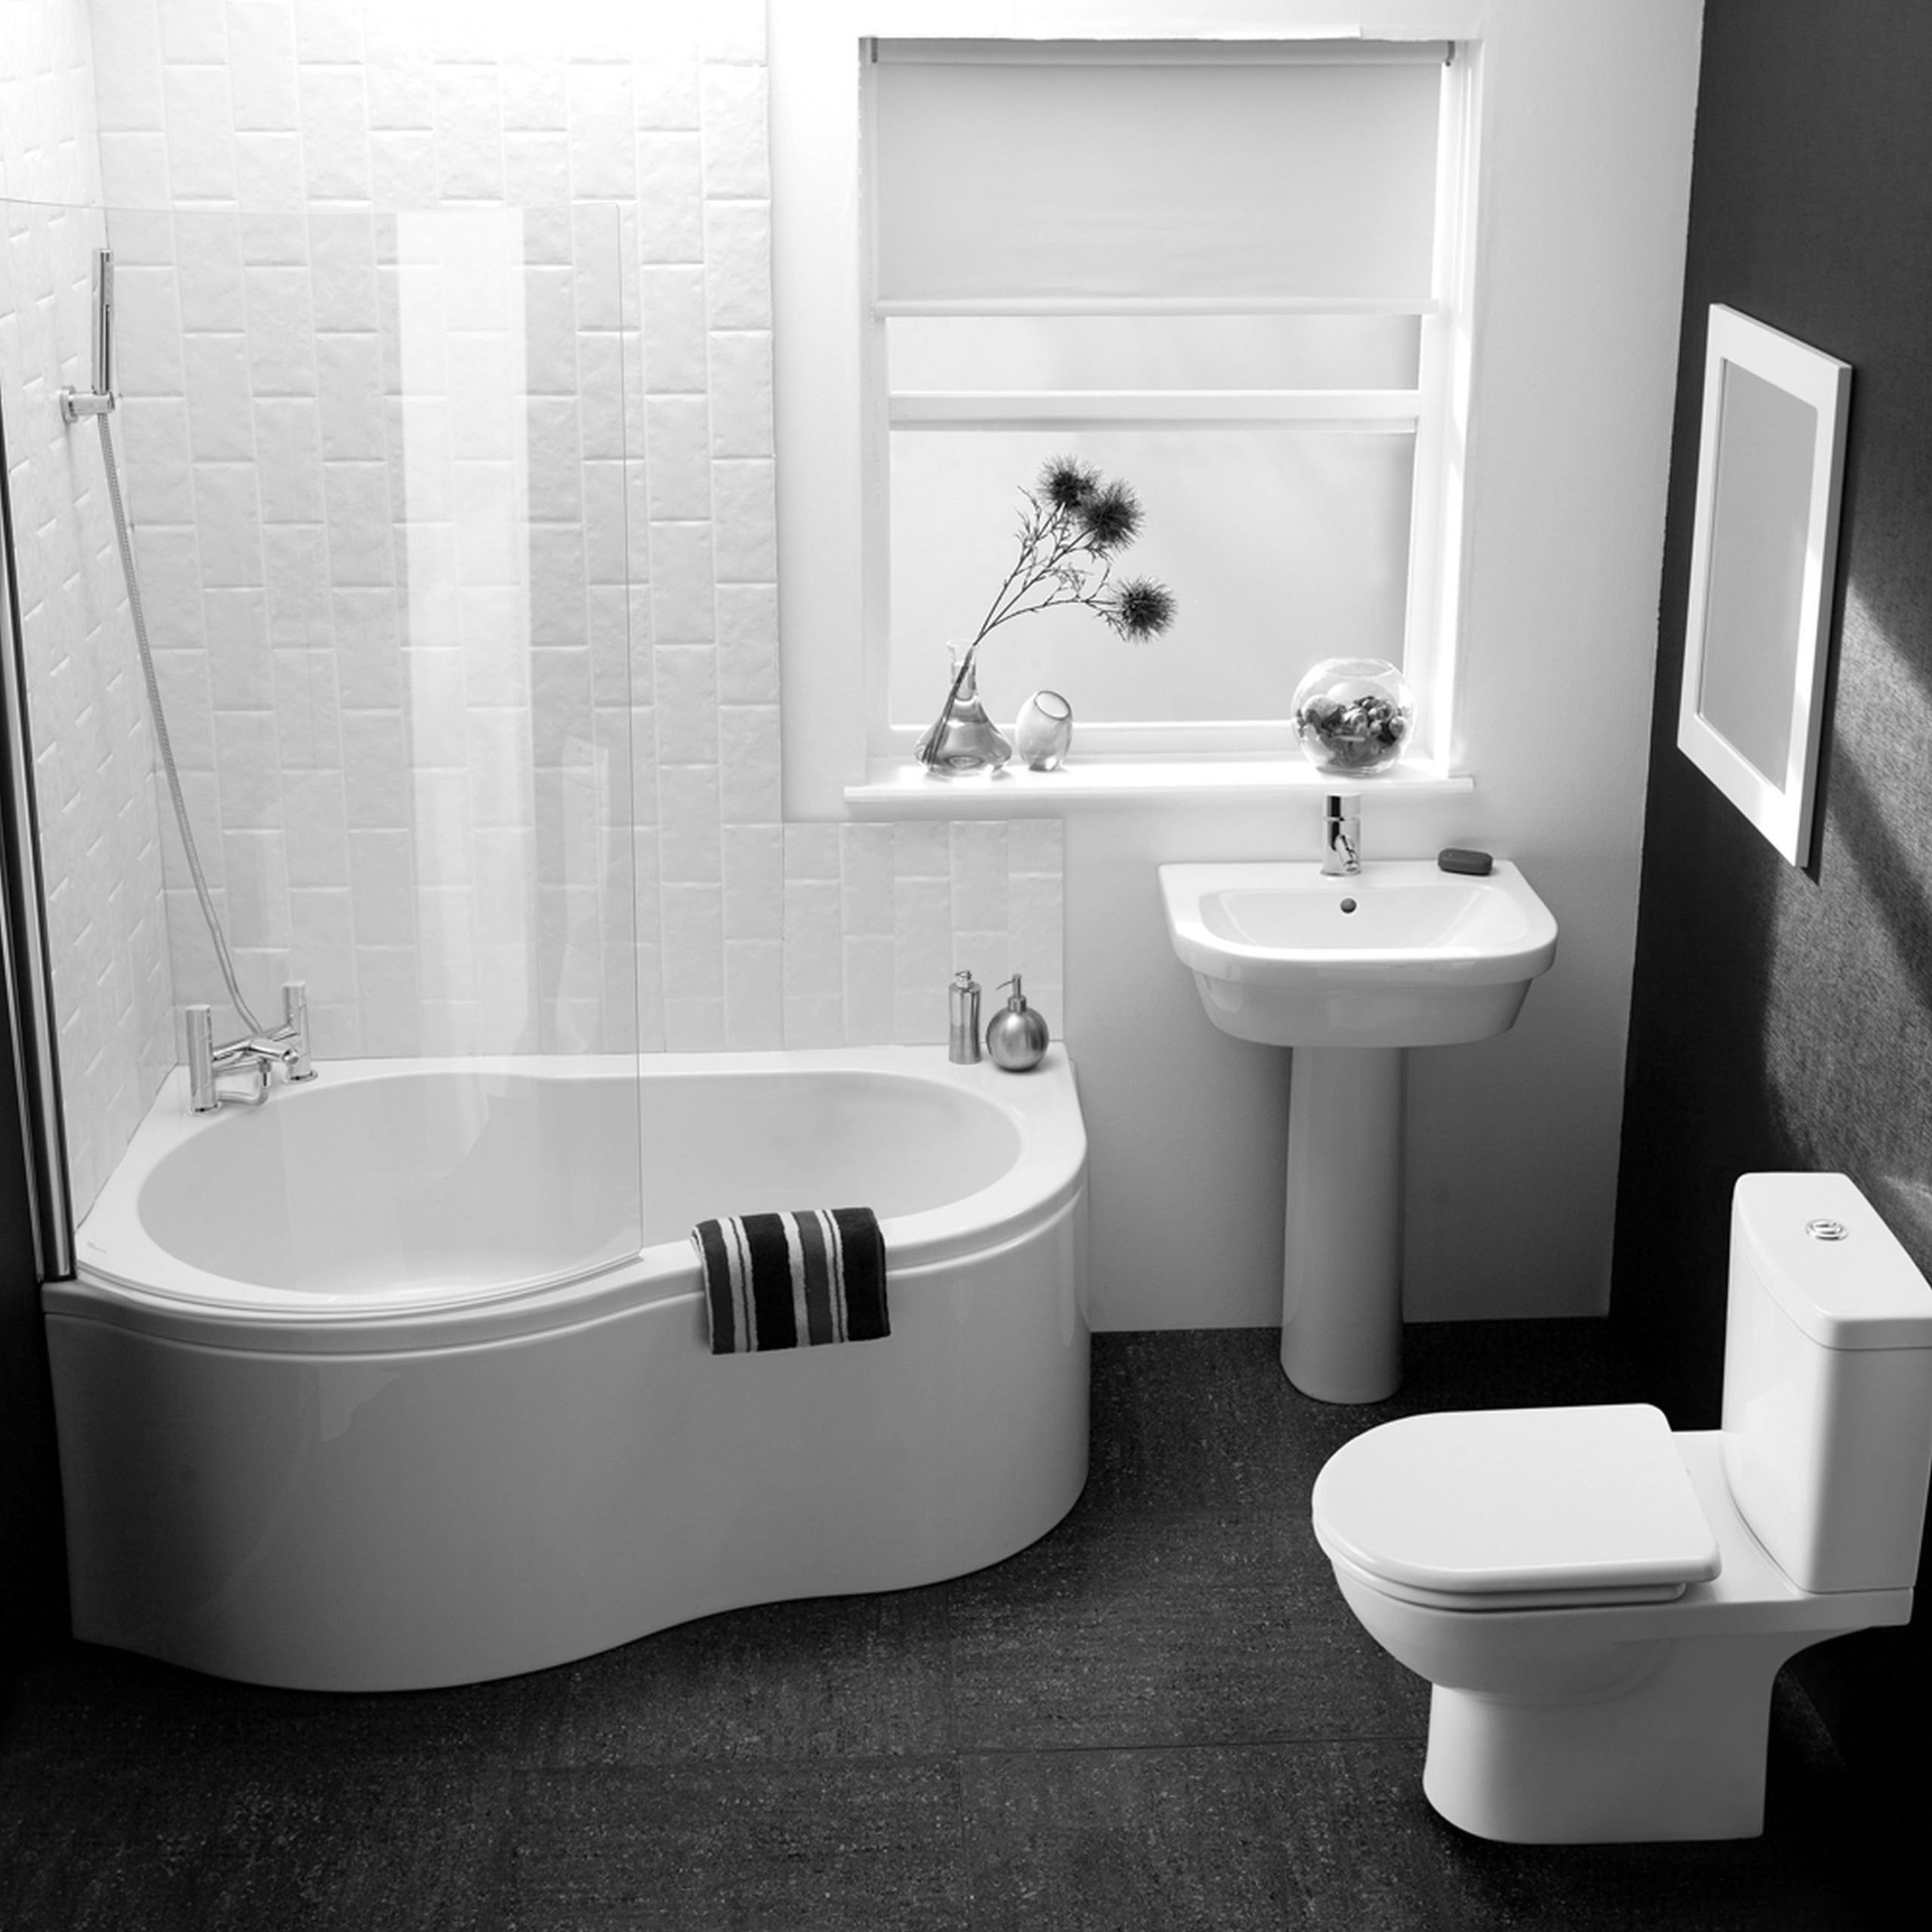 Sumptuous dark bathroom floor tile ideas with white corner tubs